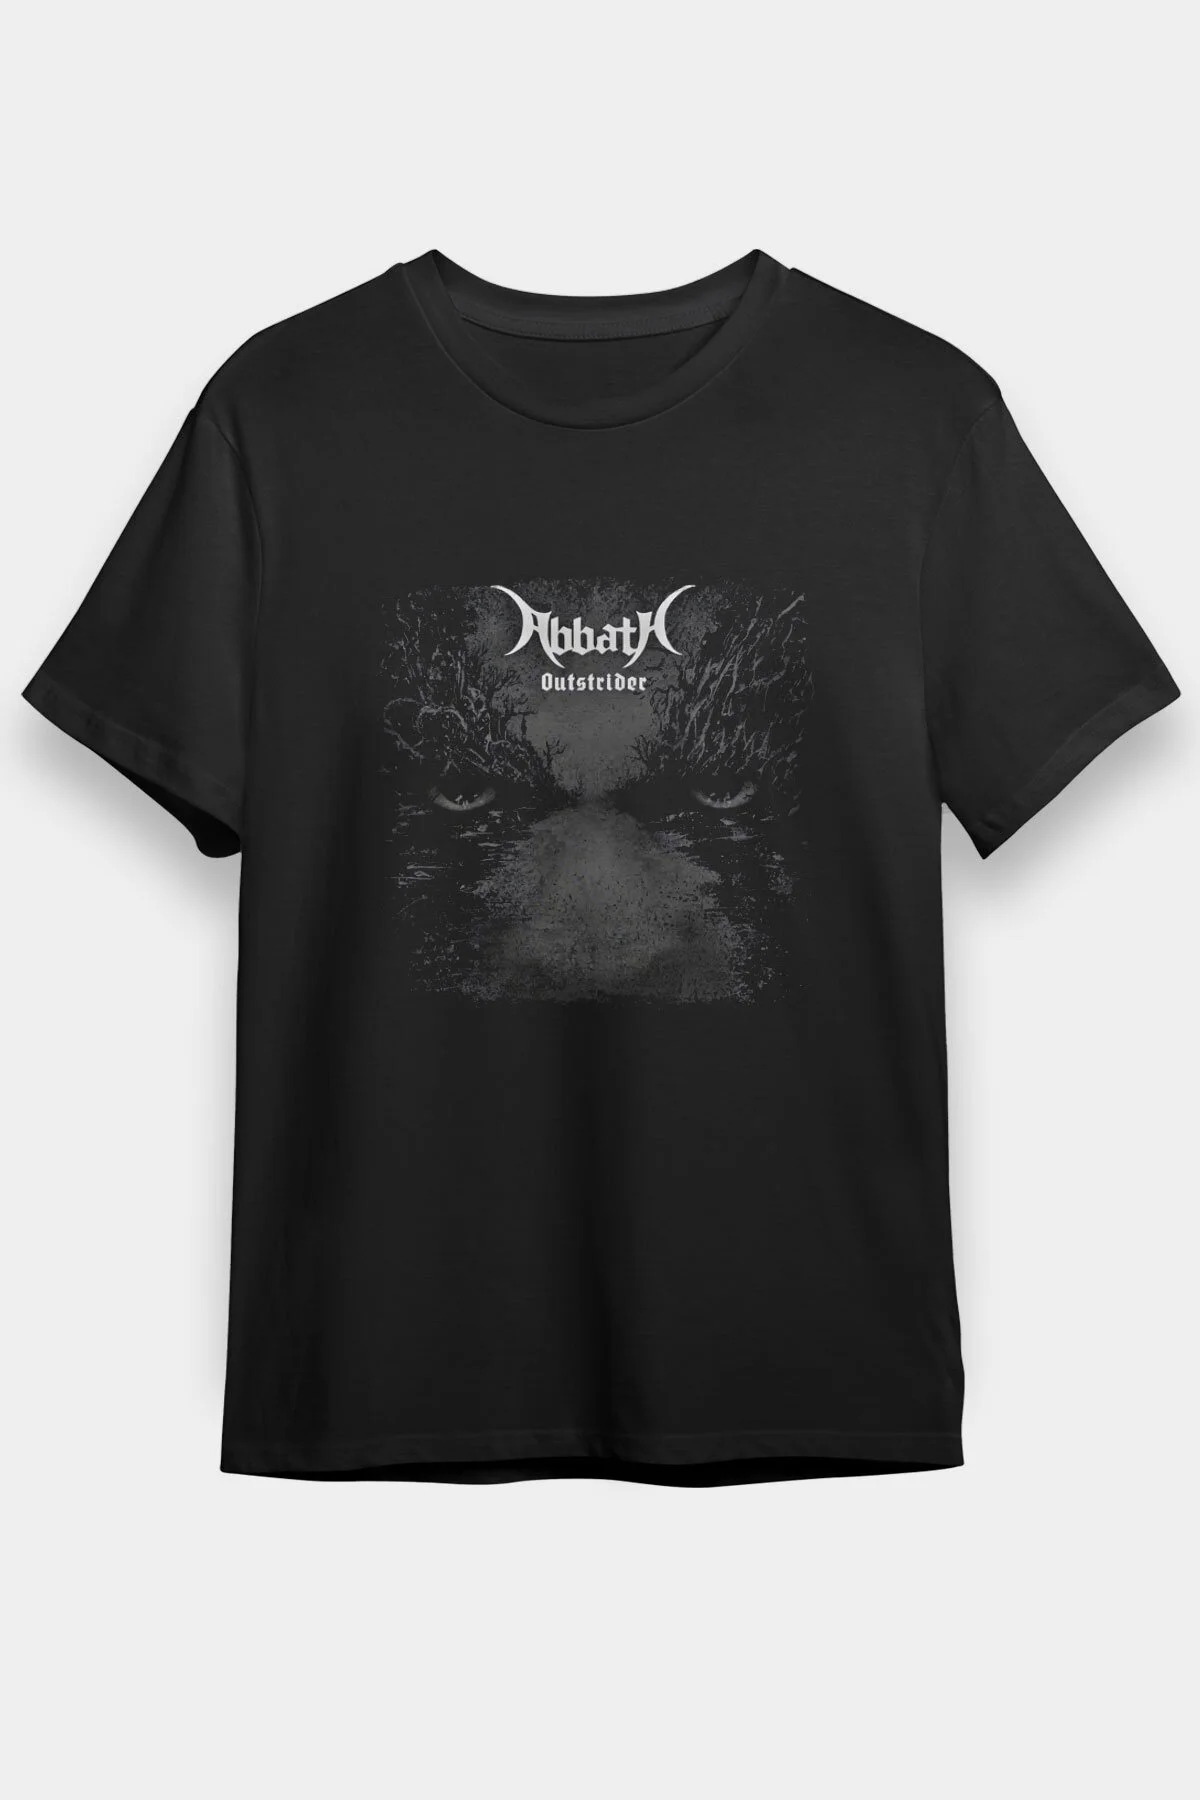 Abbath Music Band ,Unisex Tshirt  11 /